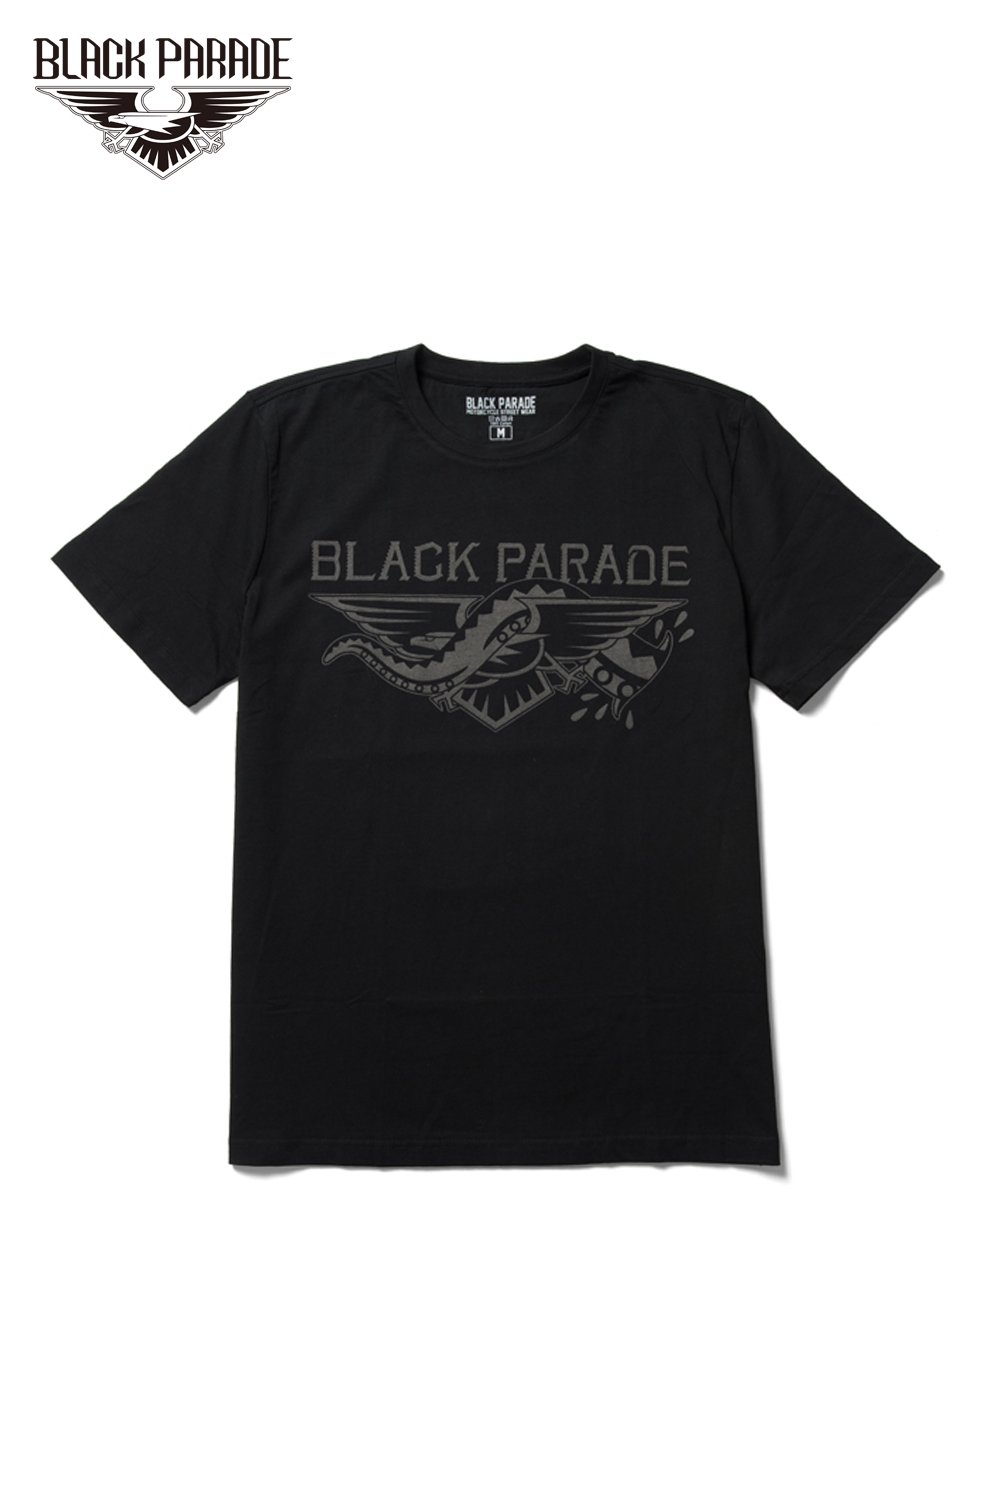 BLACK PARADE(ブラックパレード) Tシャツ Black Parade x DF.SQEZ Tee 